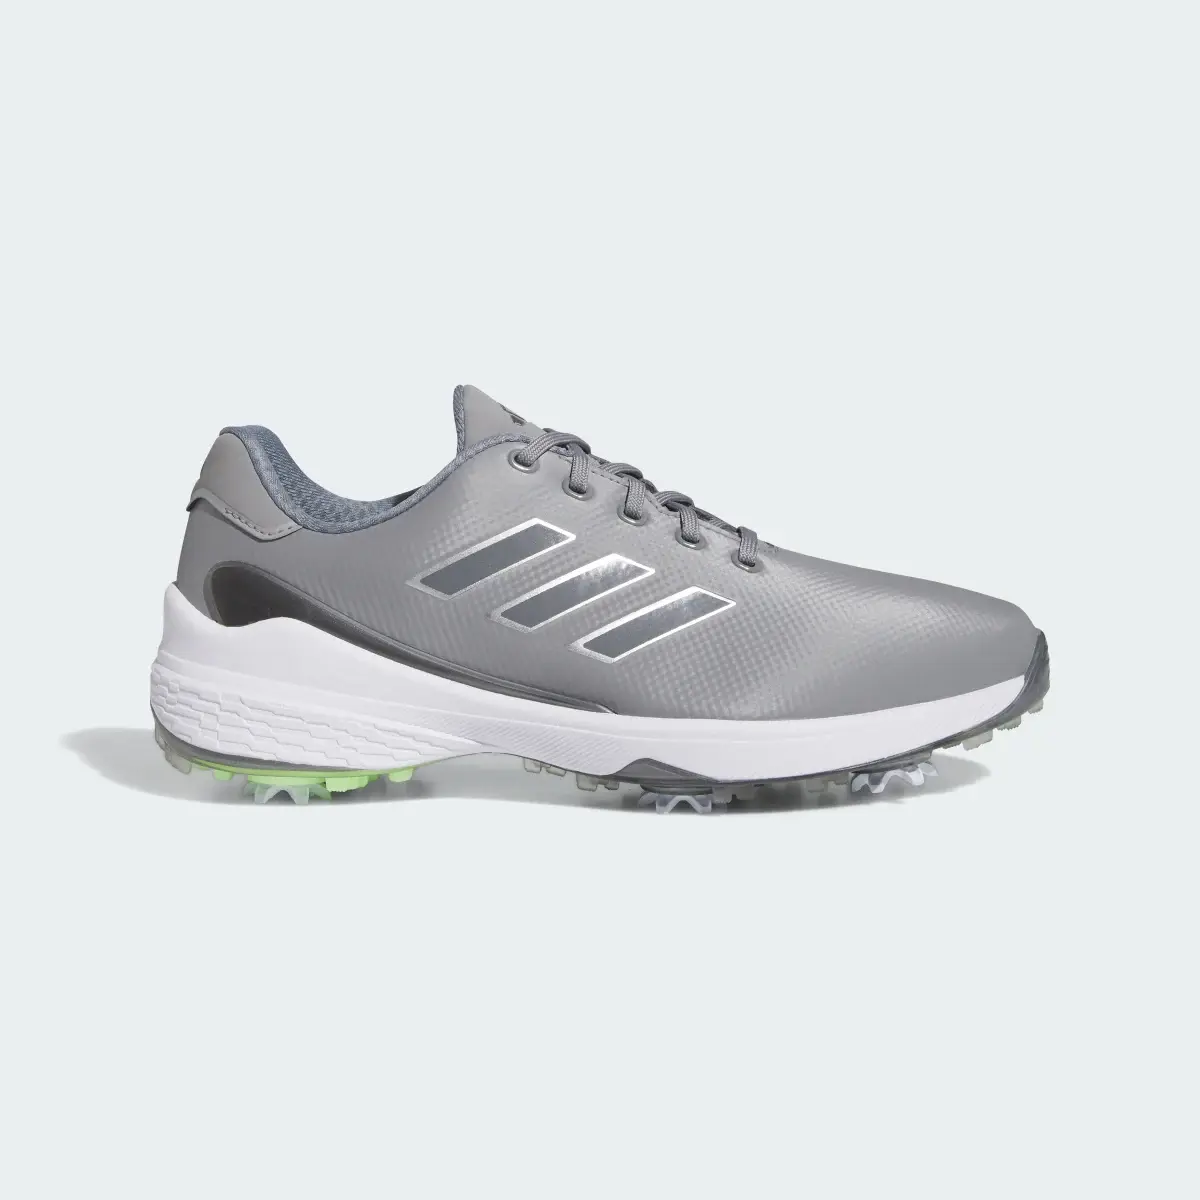 Adidas ZG23 Lightstrike Golf Shoes. 2